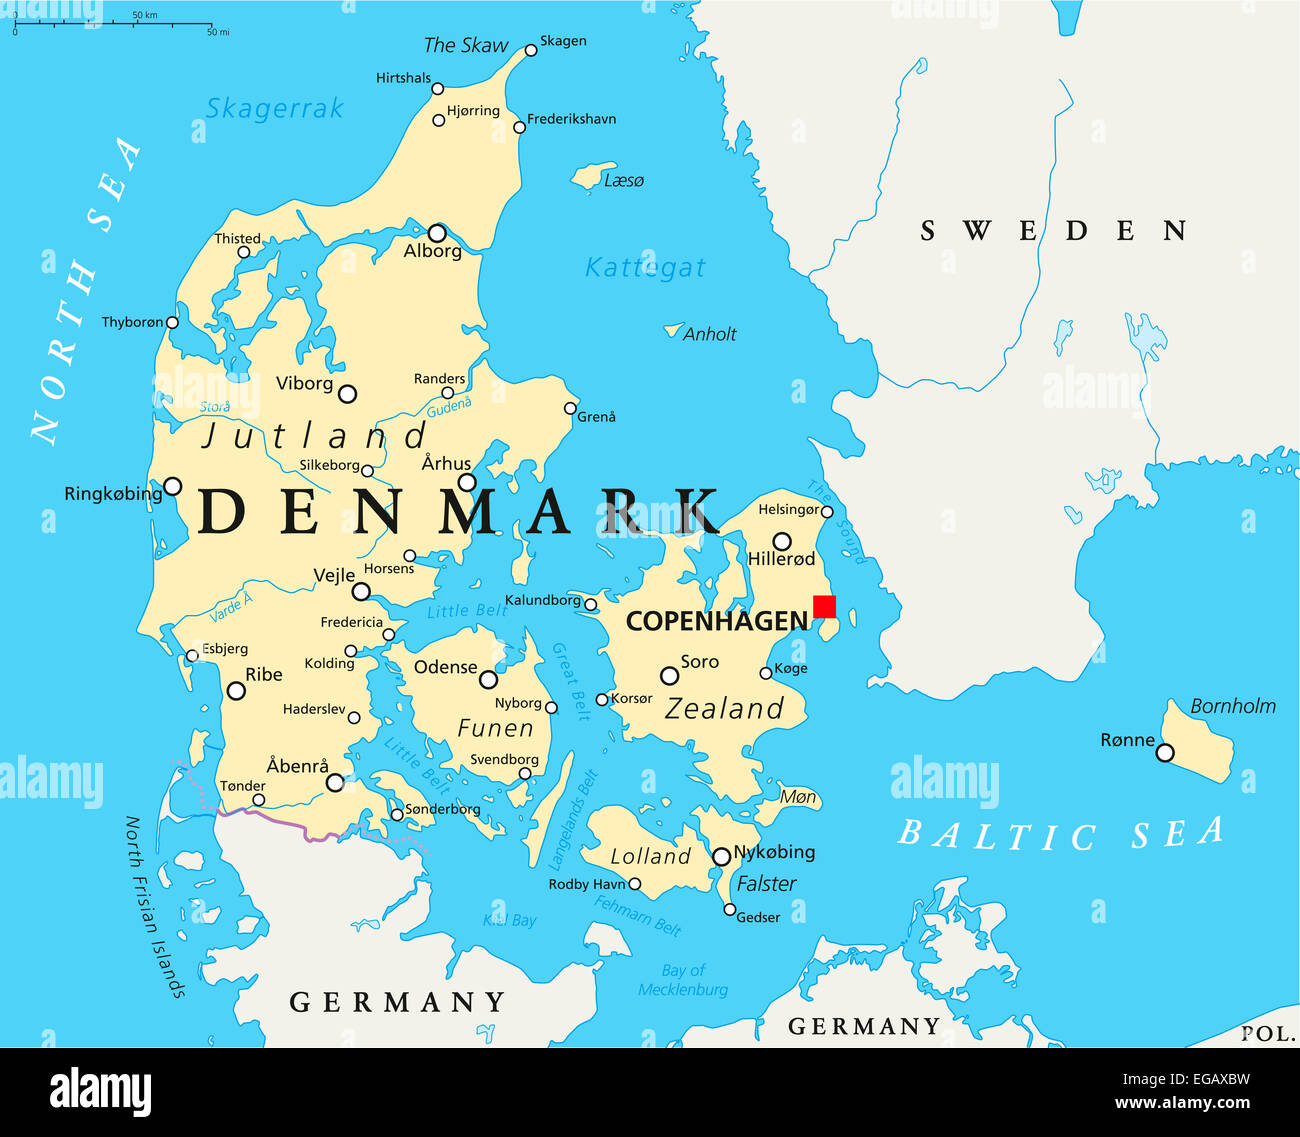 Denmark Political Map with capital Copenhagen, national borders